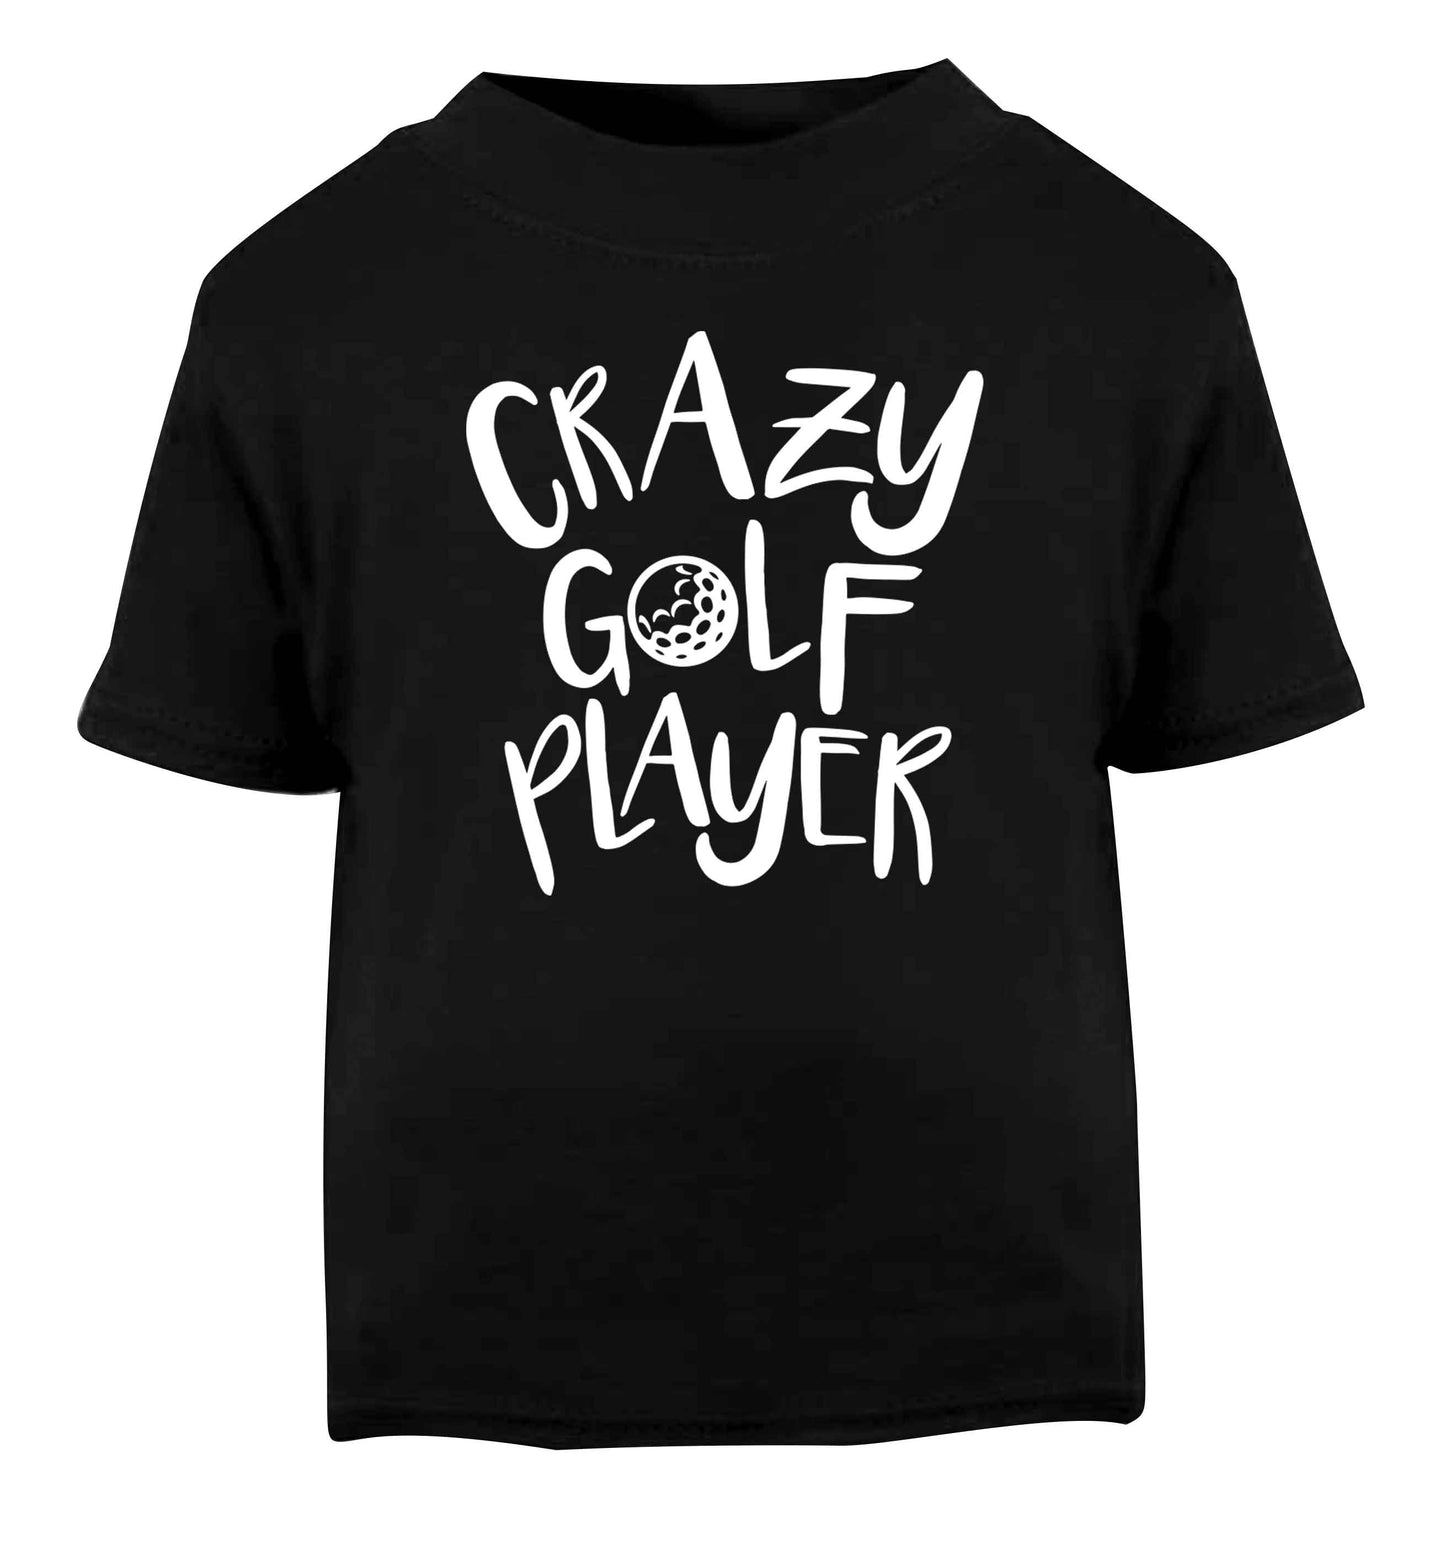 Crazy golf player Black Baby Toddler Tshirt 2 years